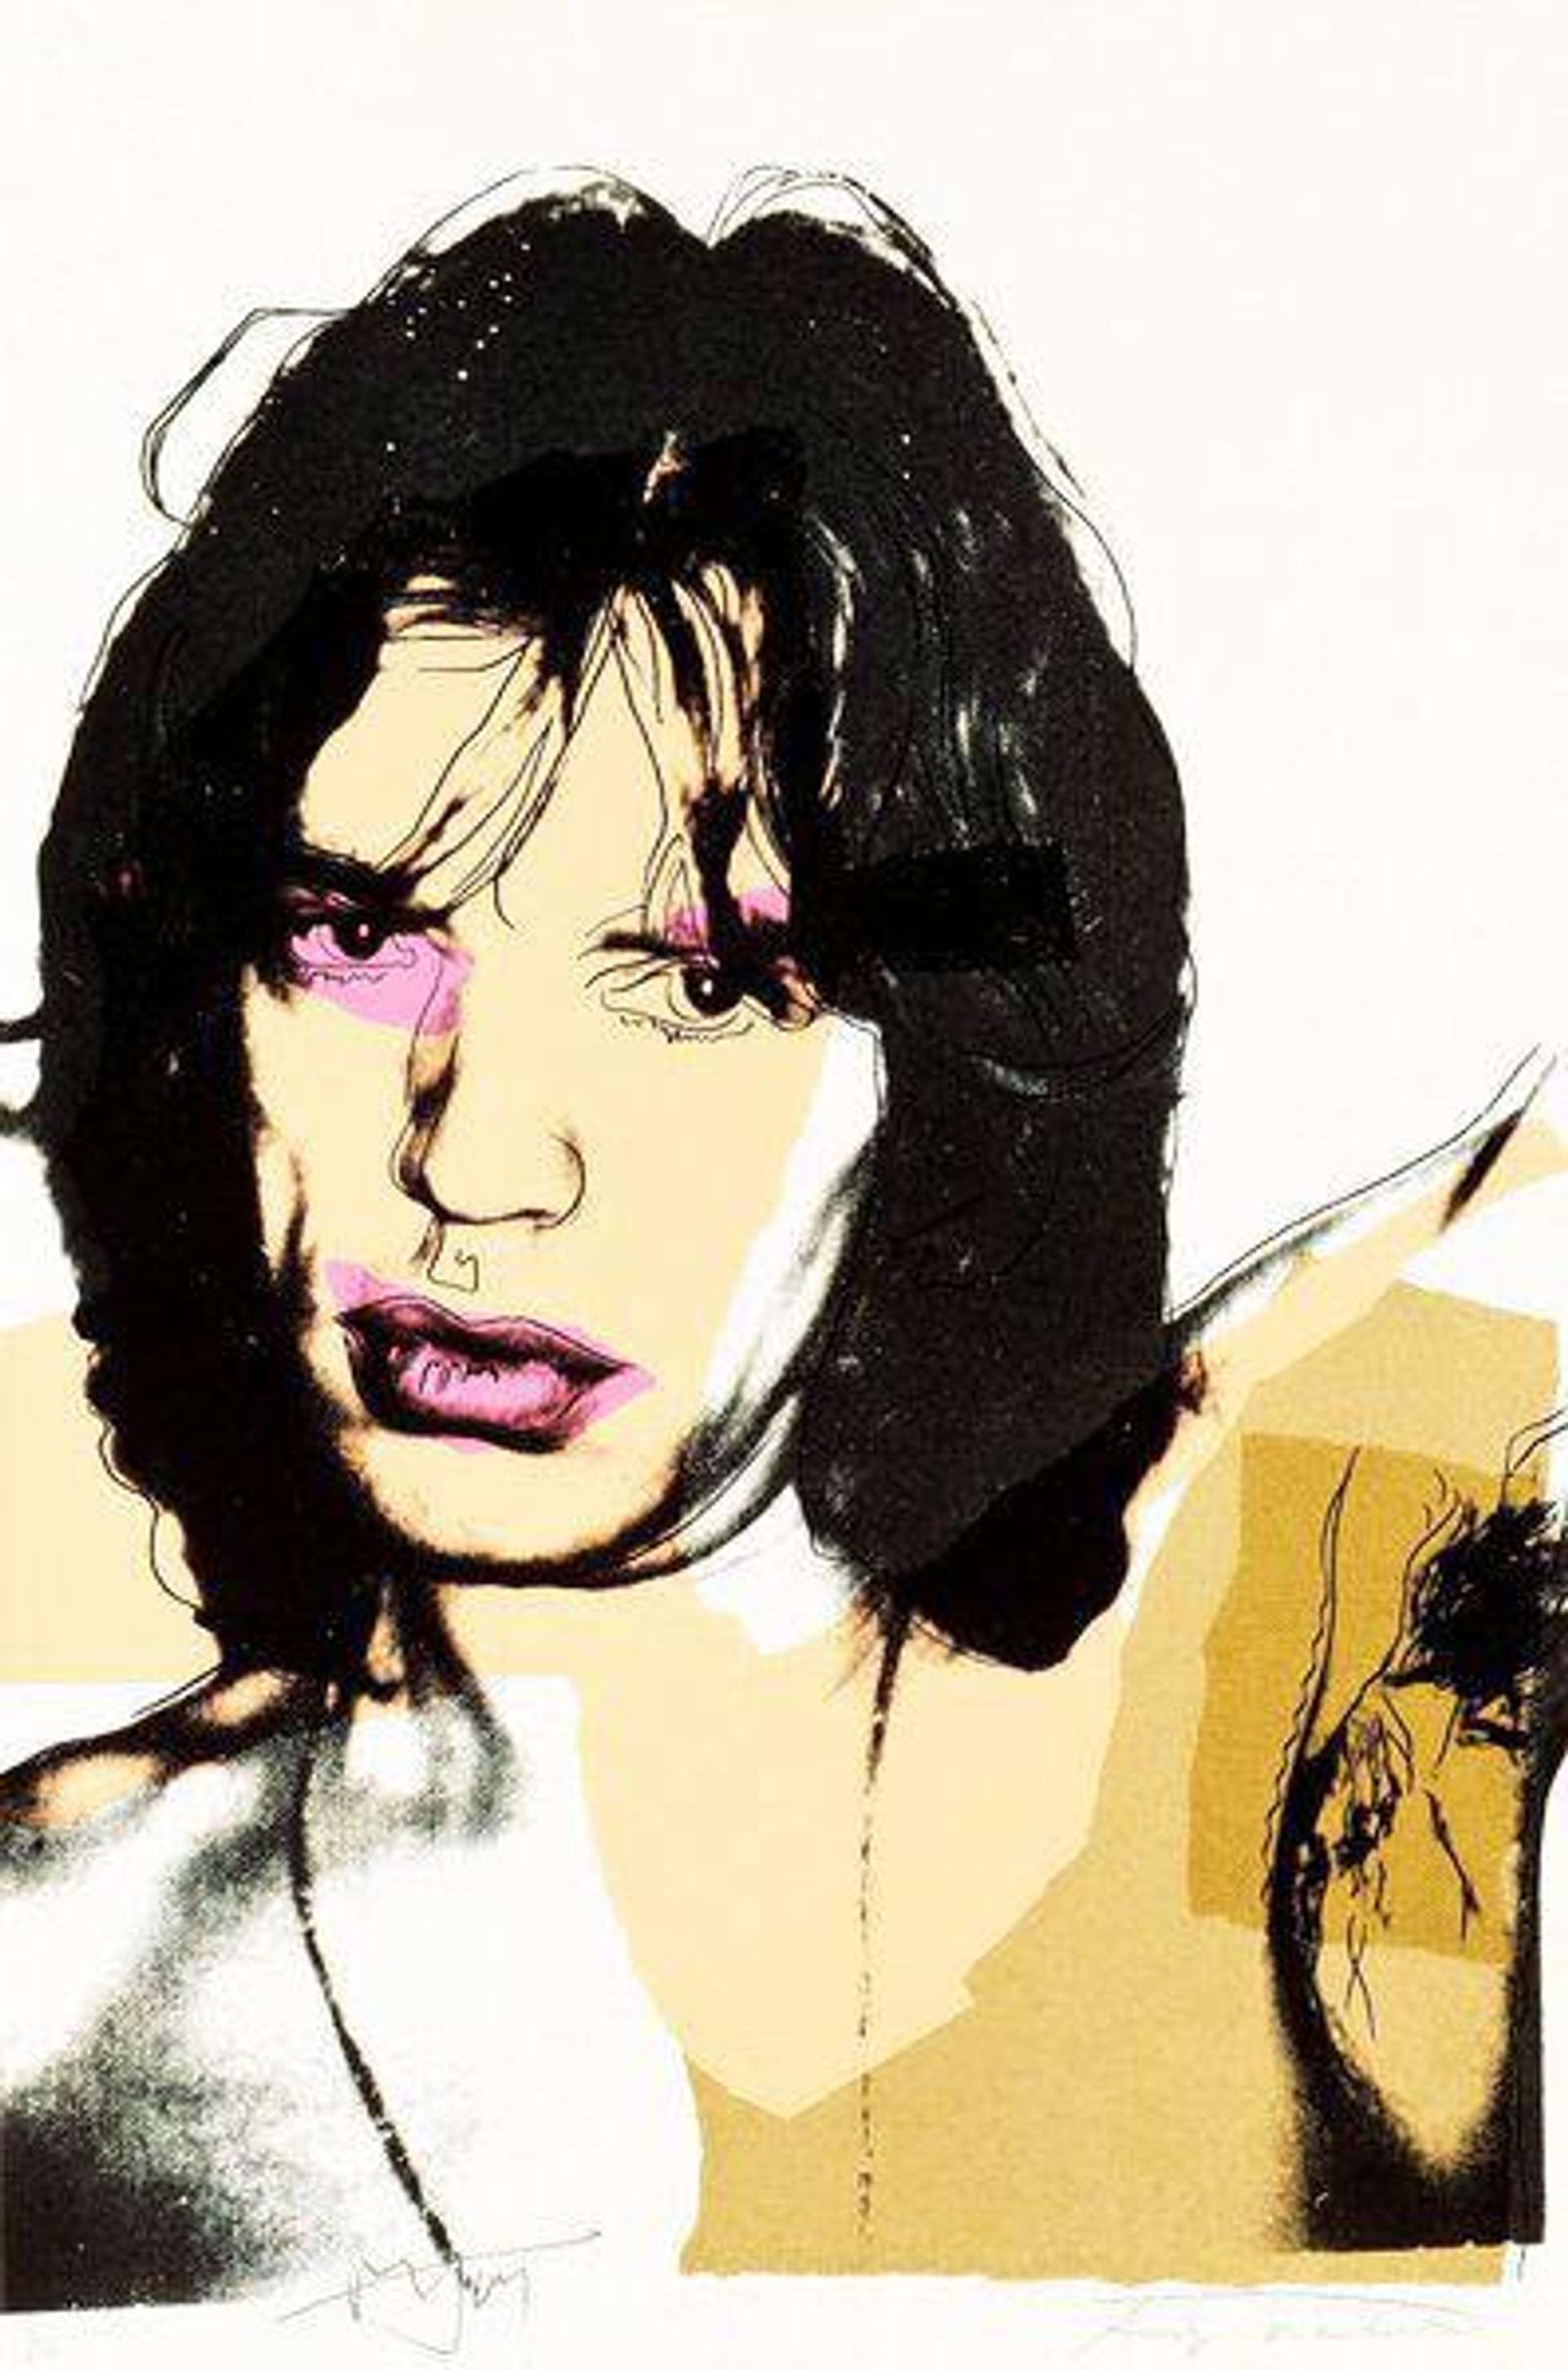 Andy Warhol: Mick Jagger (F. & S. II.141) - Signed Print